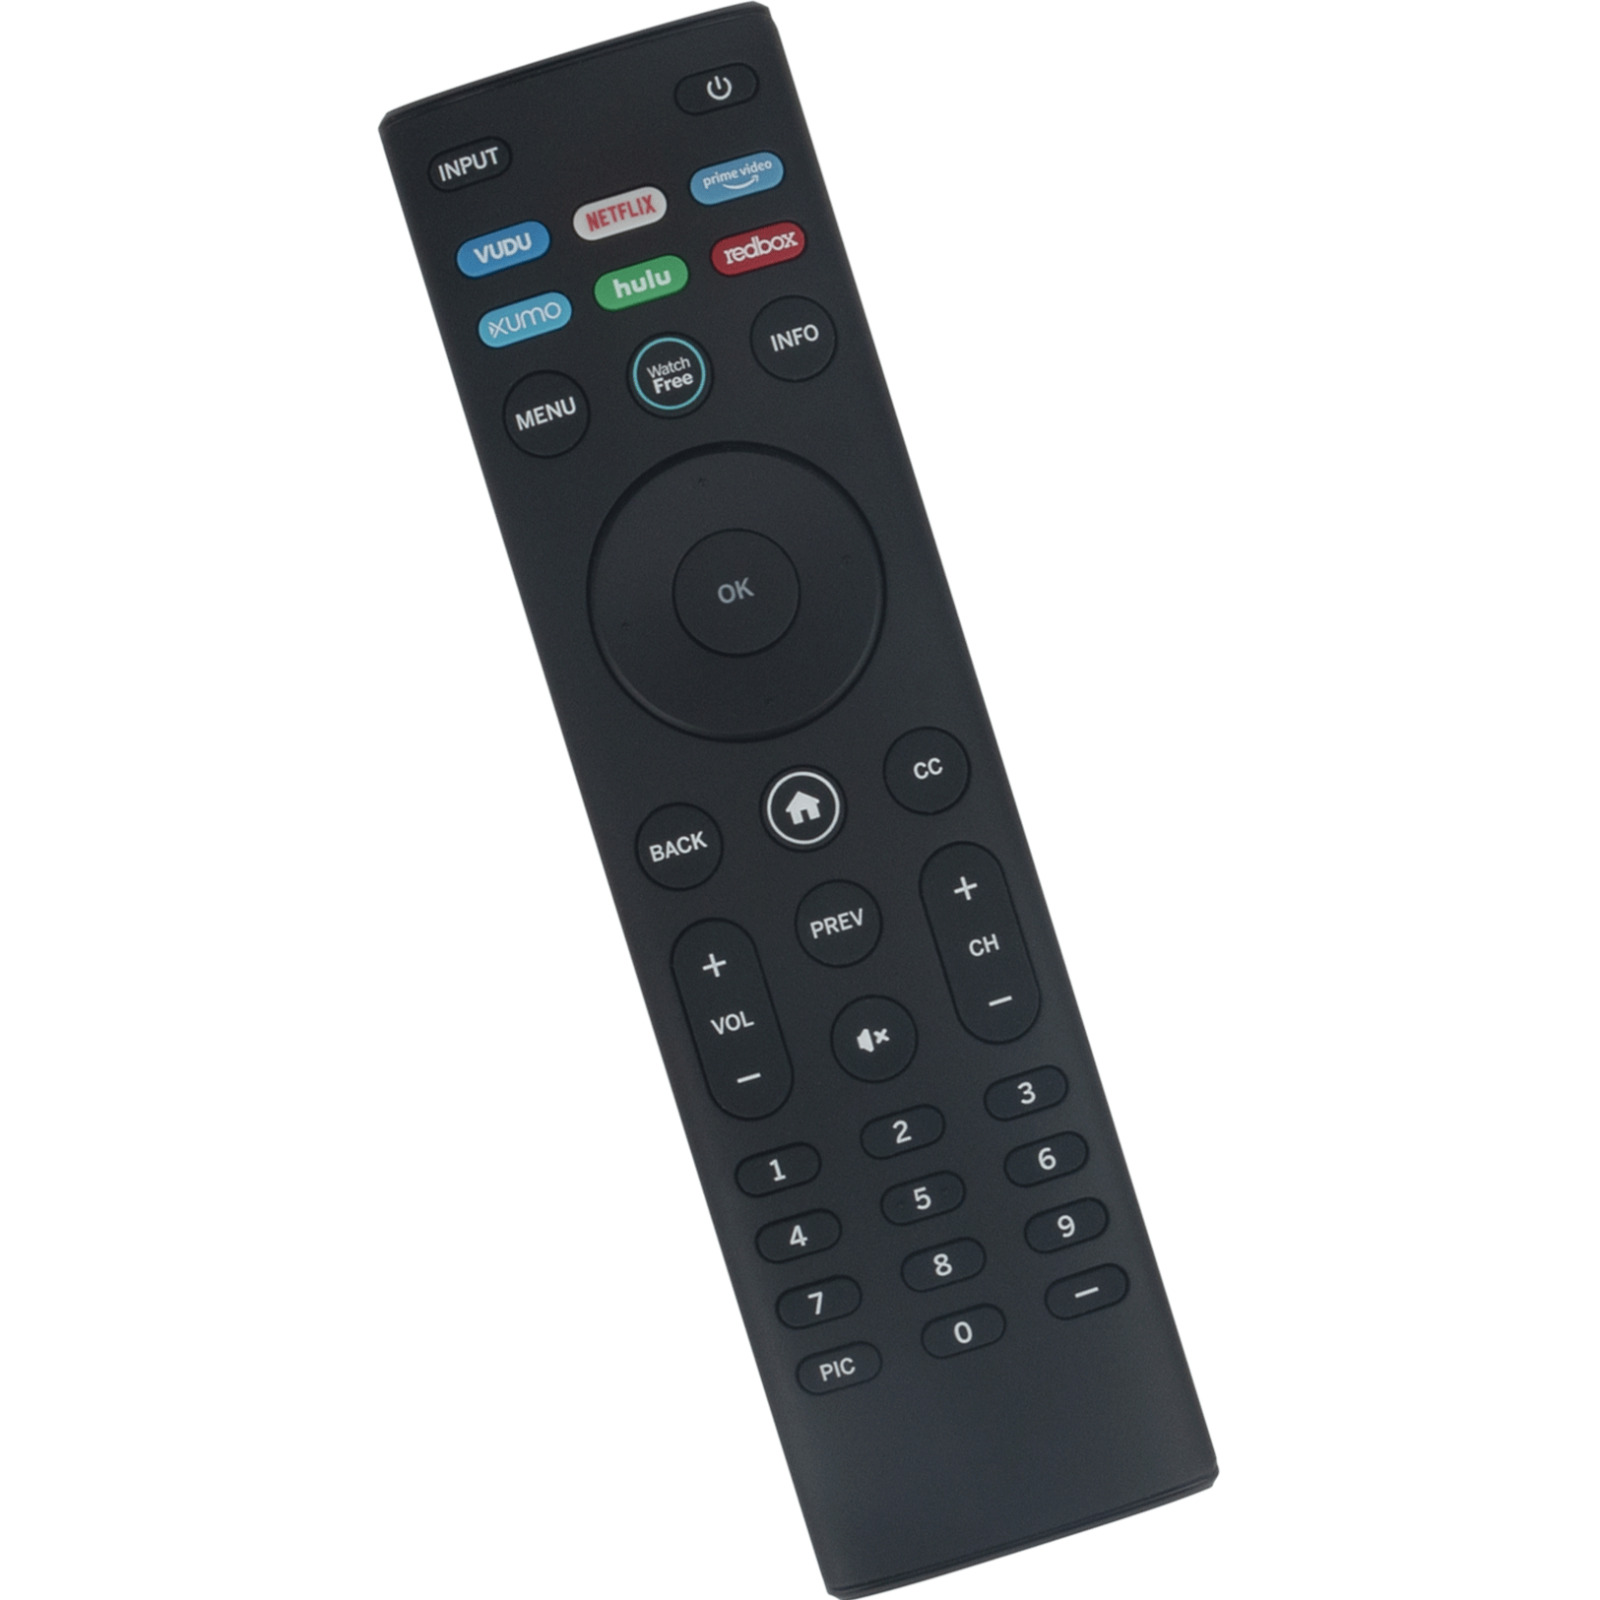 XRT-140L New Remote Control fit for Vizio Smart TV XRT140L with 6 App Shortcuts